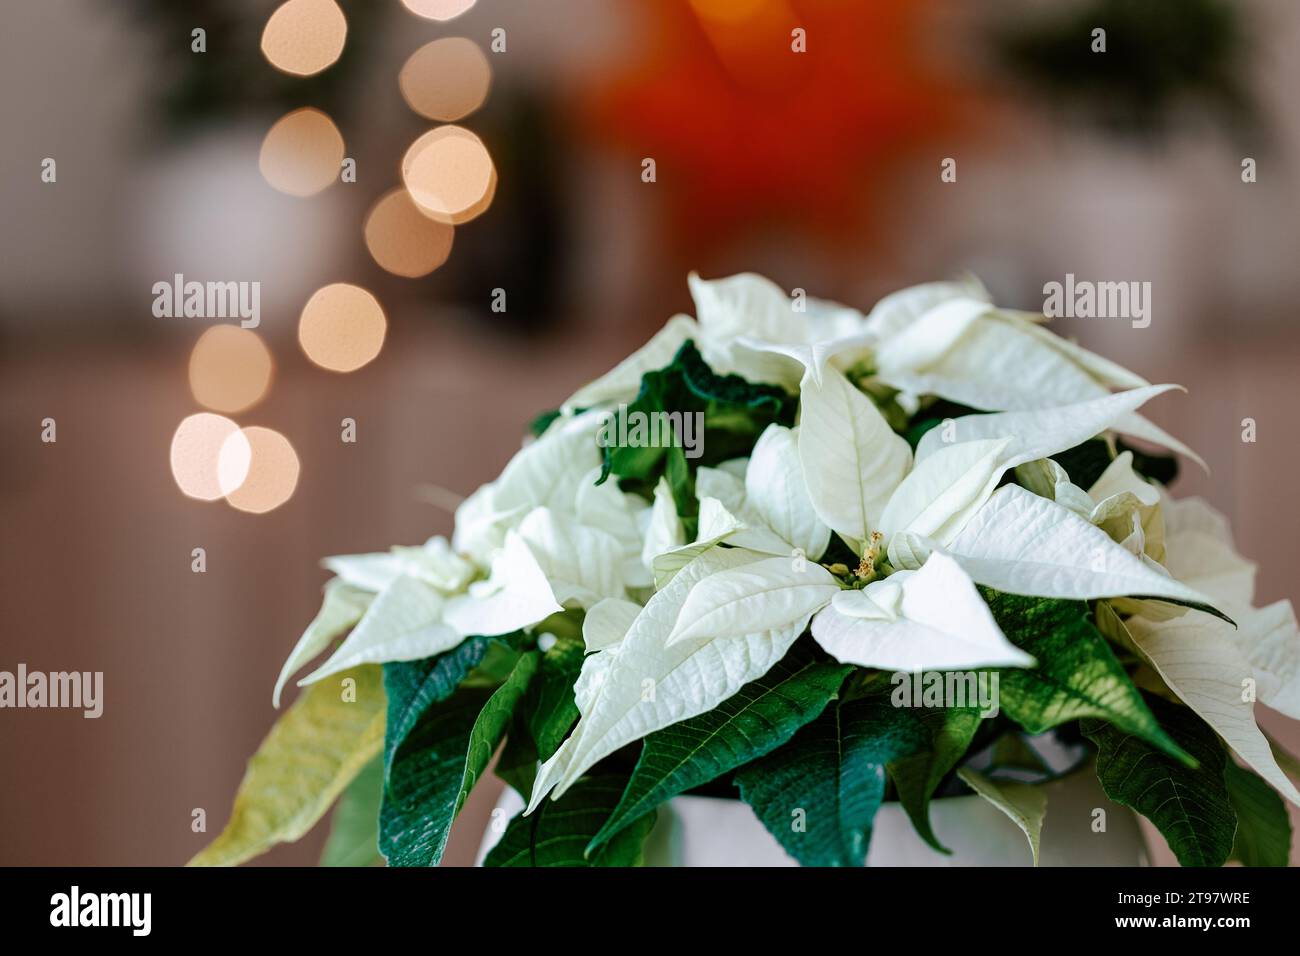 festive cozy interior arrangement, winter christmas concept, white poinsettia flower, lights Stock Photo